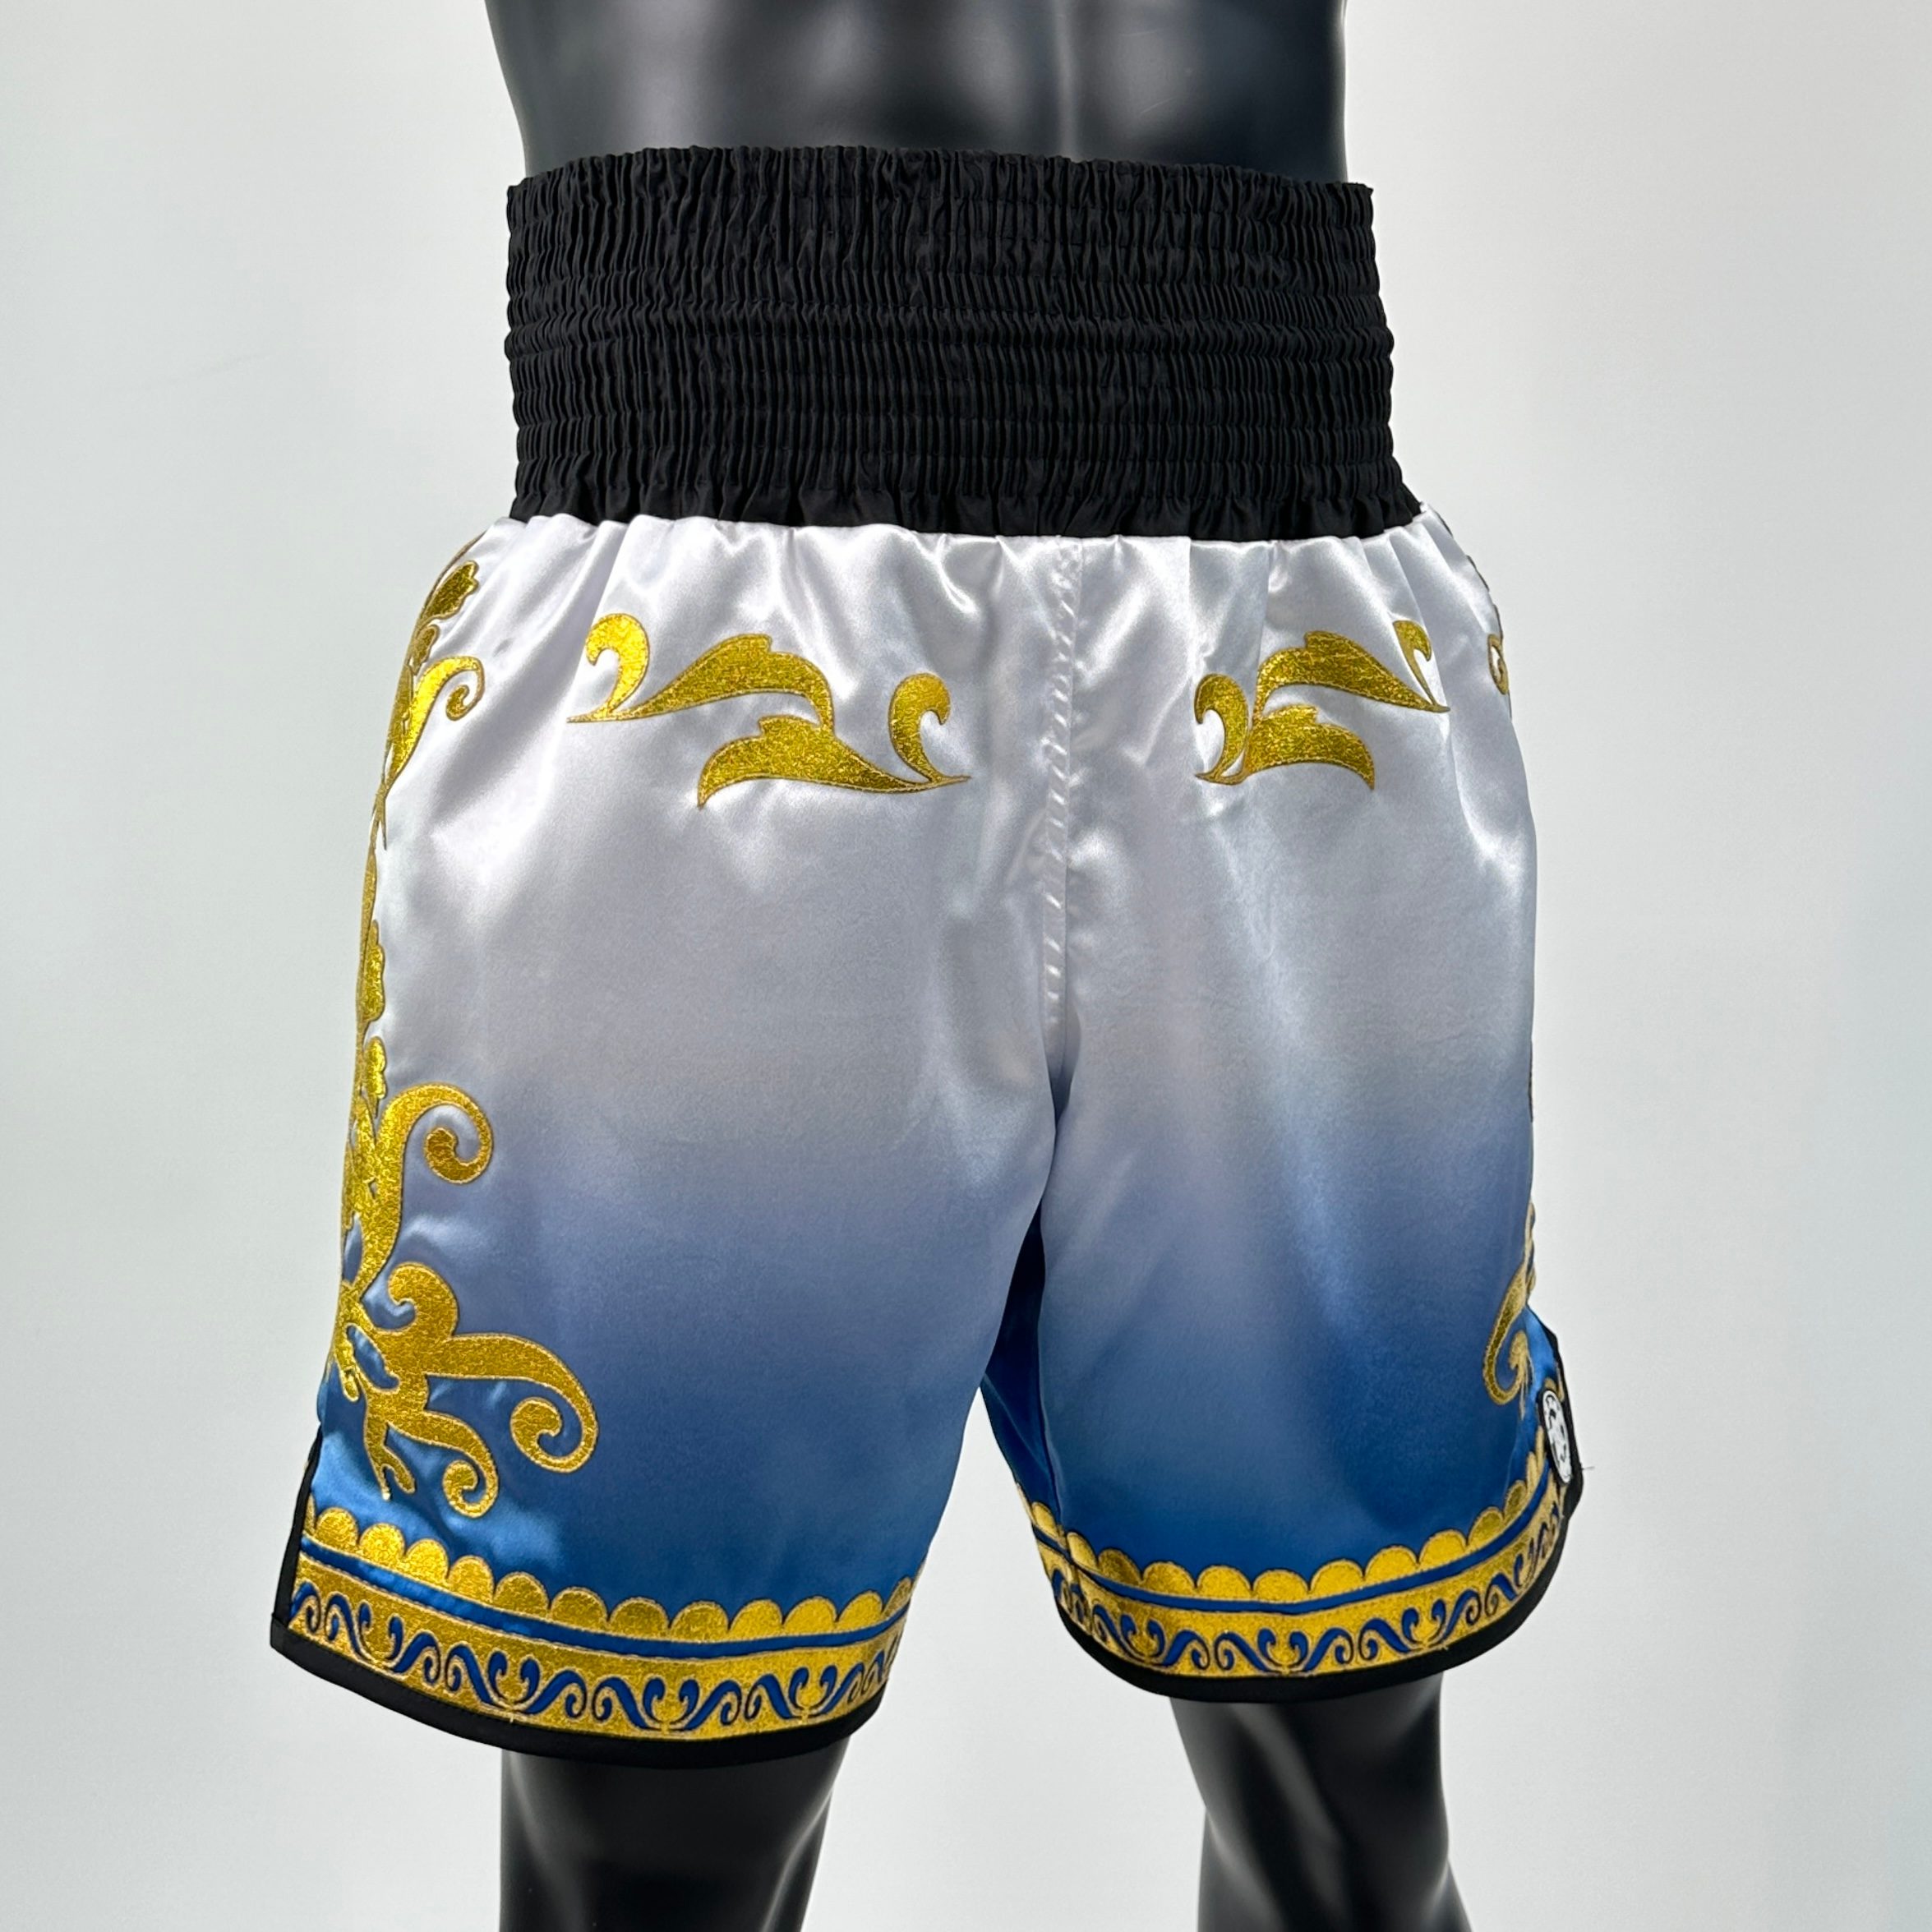 Boxing Shorts & Trunks | Gallery | Boxxerworld